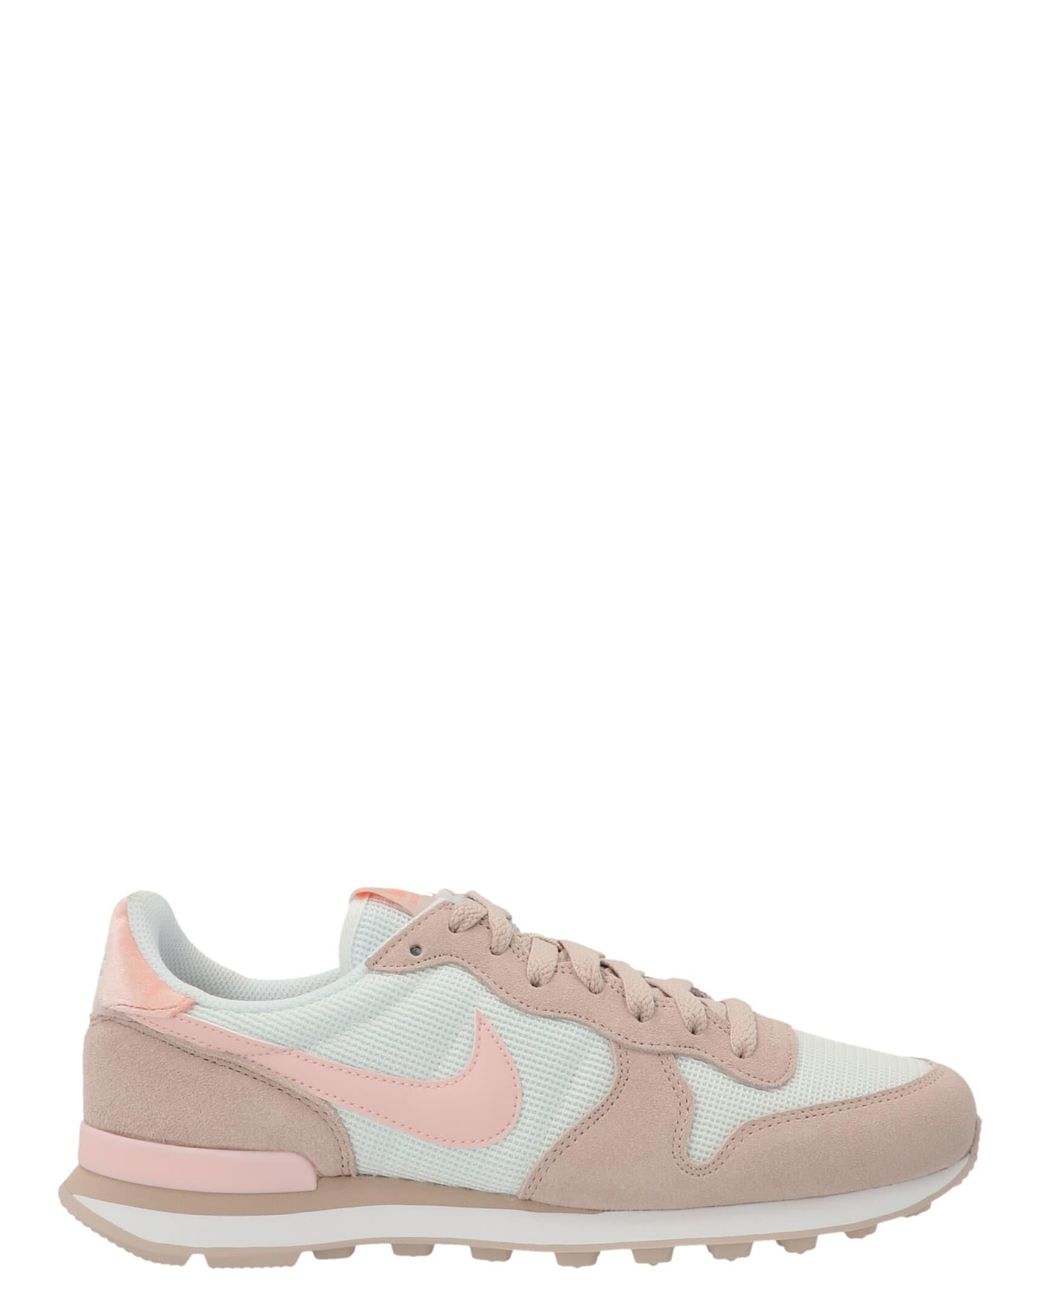 Nike Internationalist Mn Sneakers in Pink | Lyst